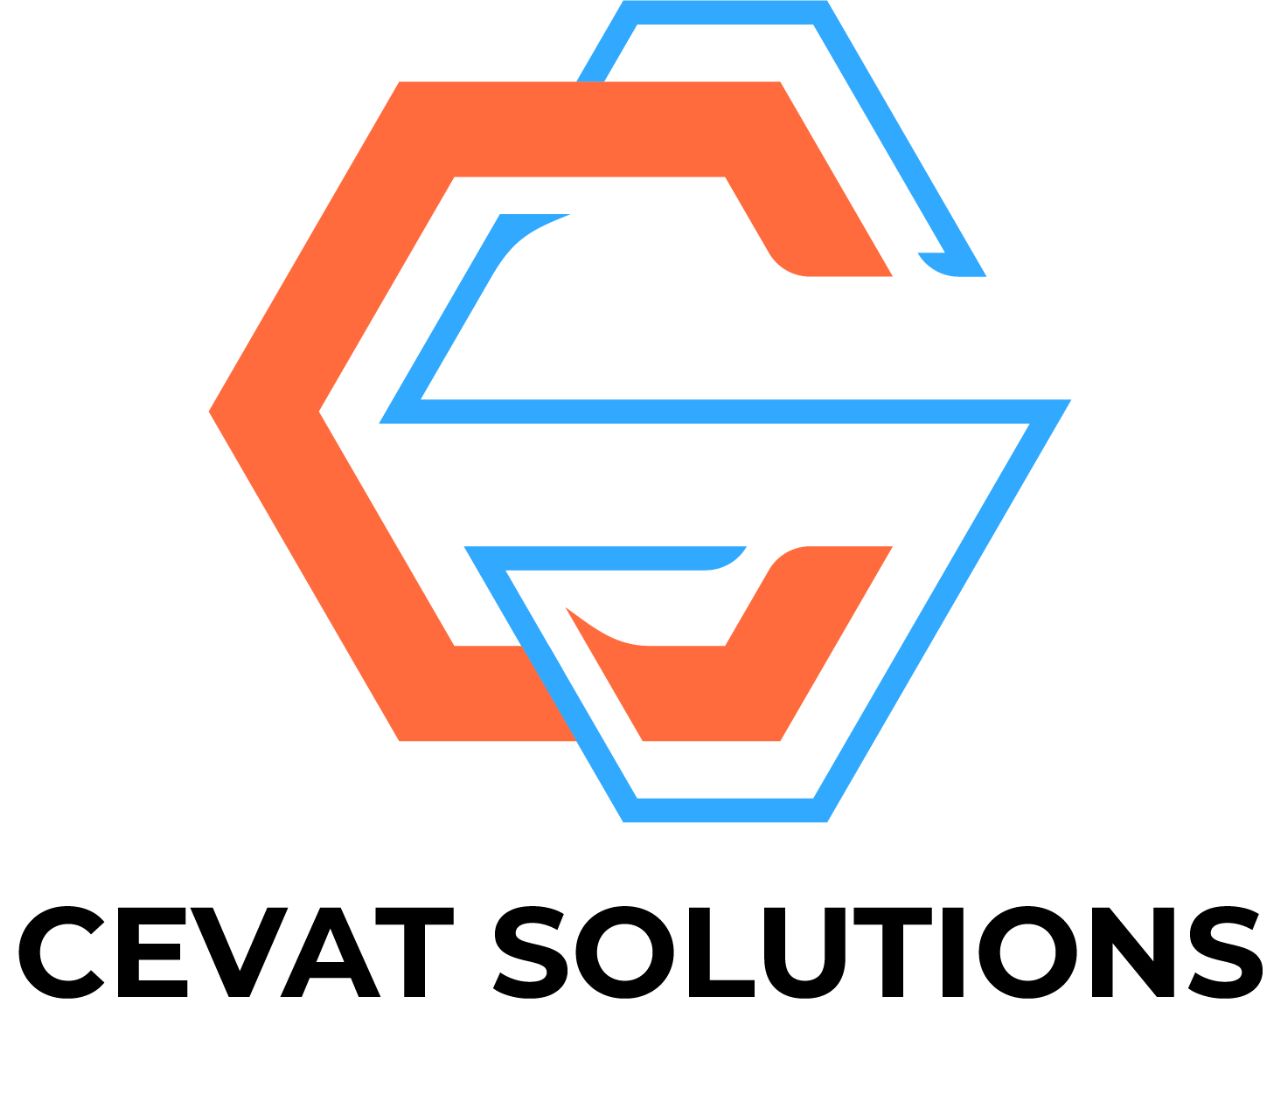 cevat solutions logo